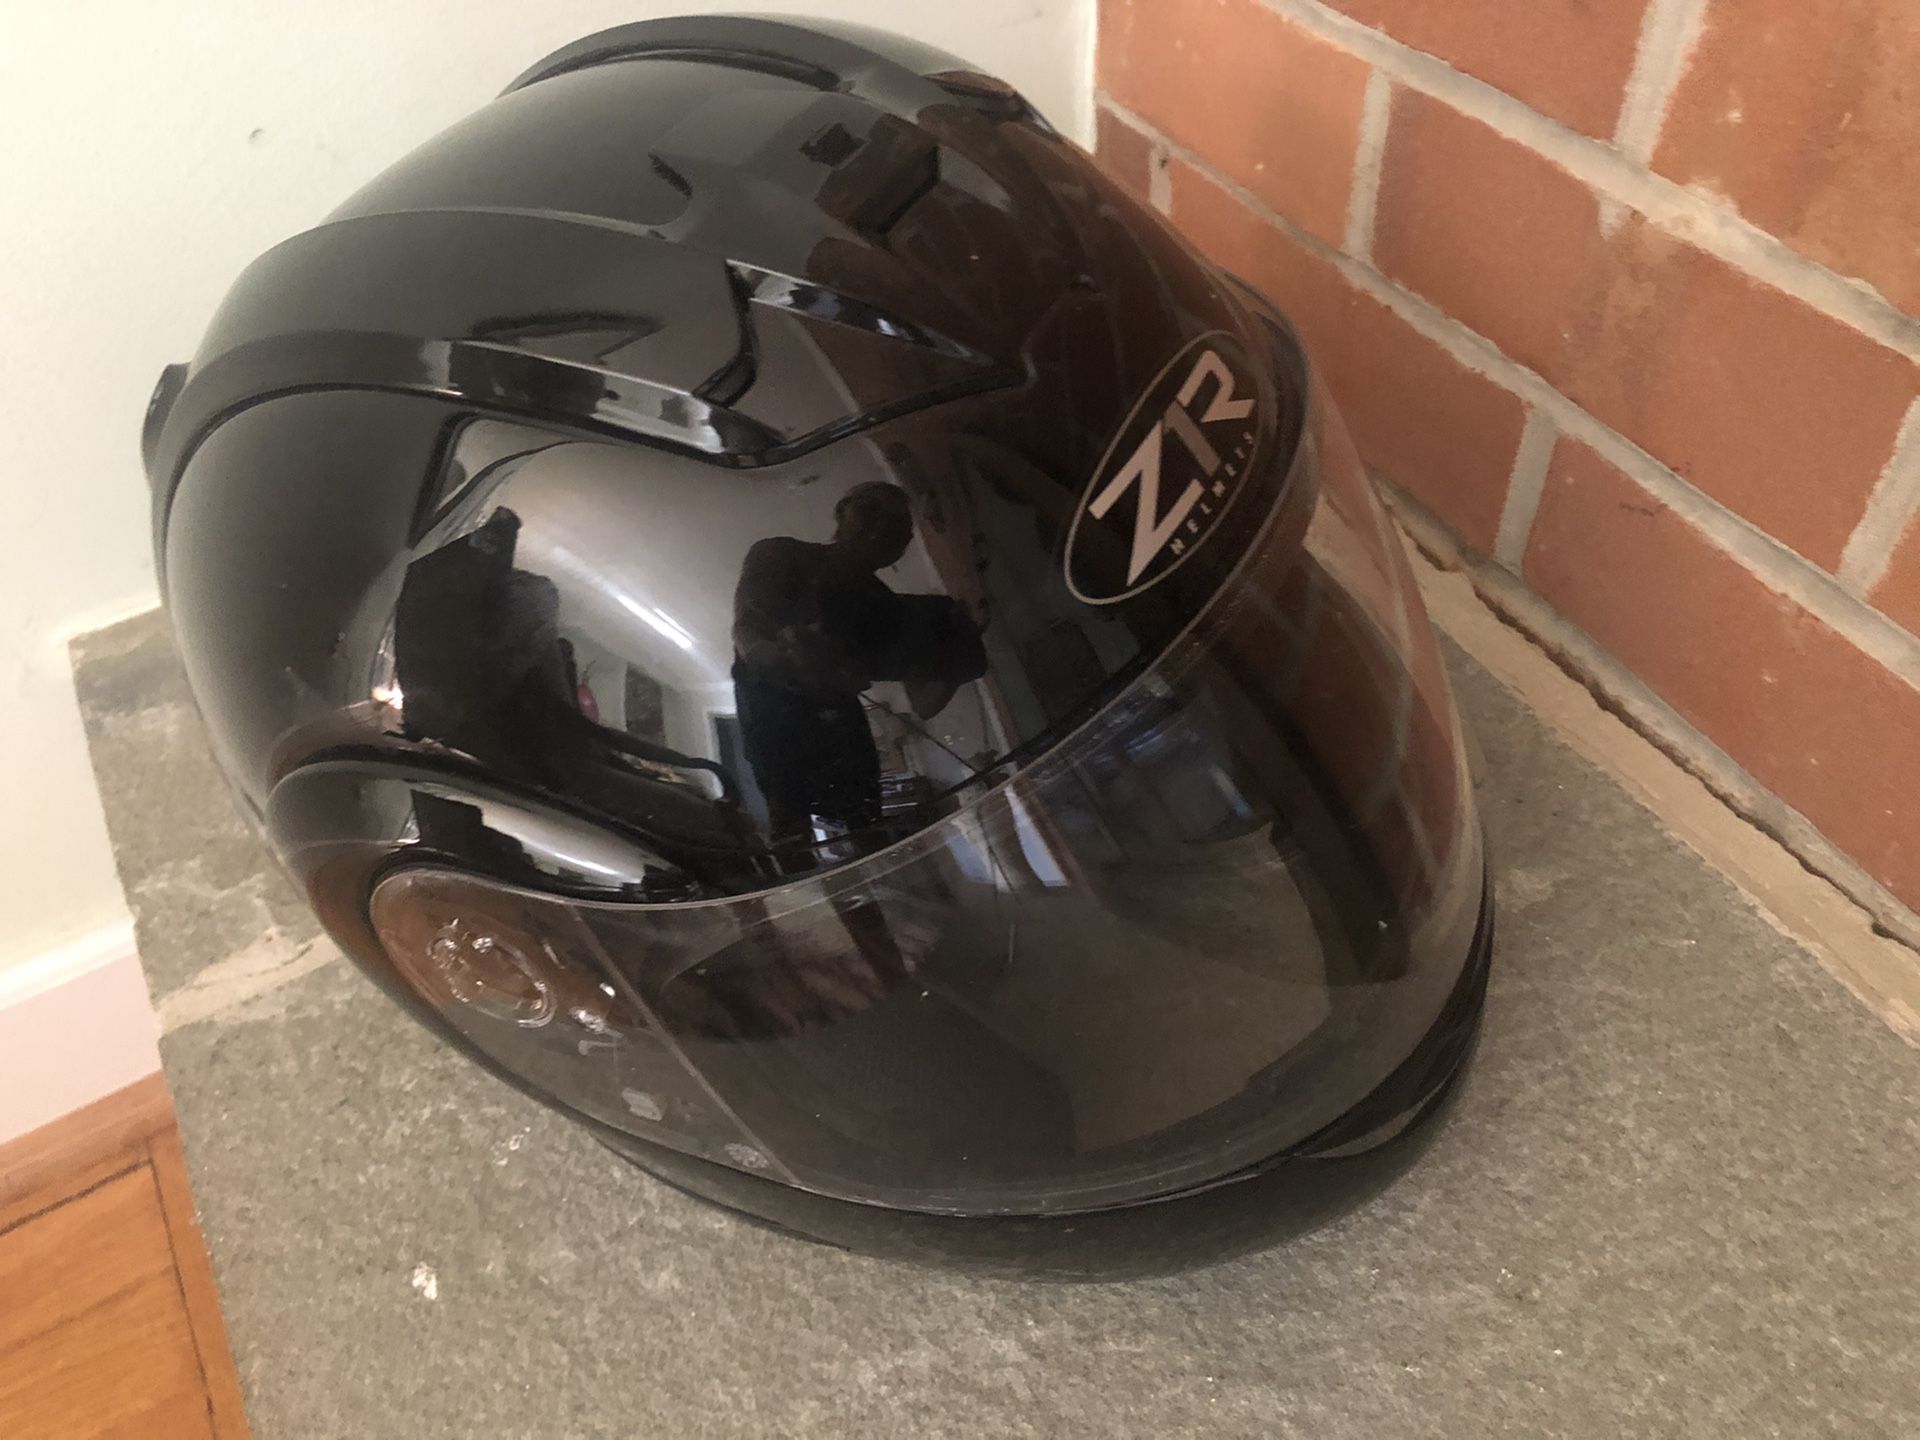 Full face motor cycle helmet size medium